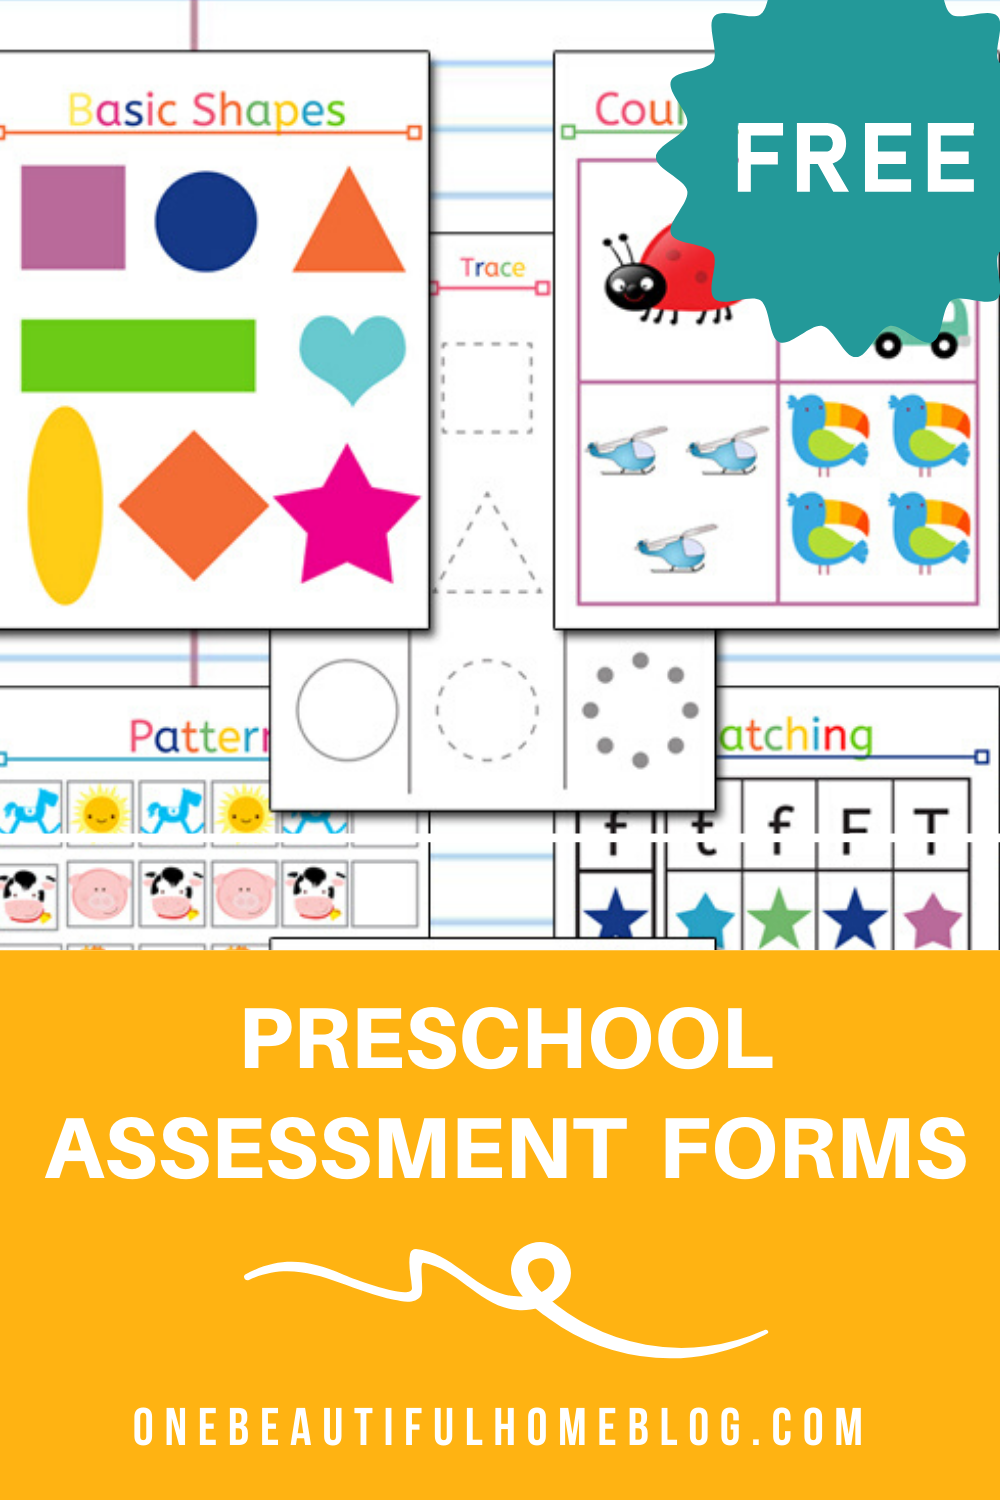 Free Preschool Assessment Forms